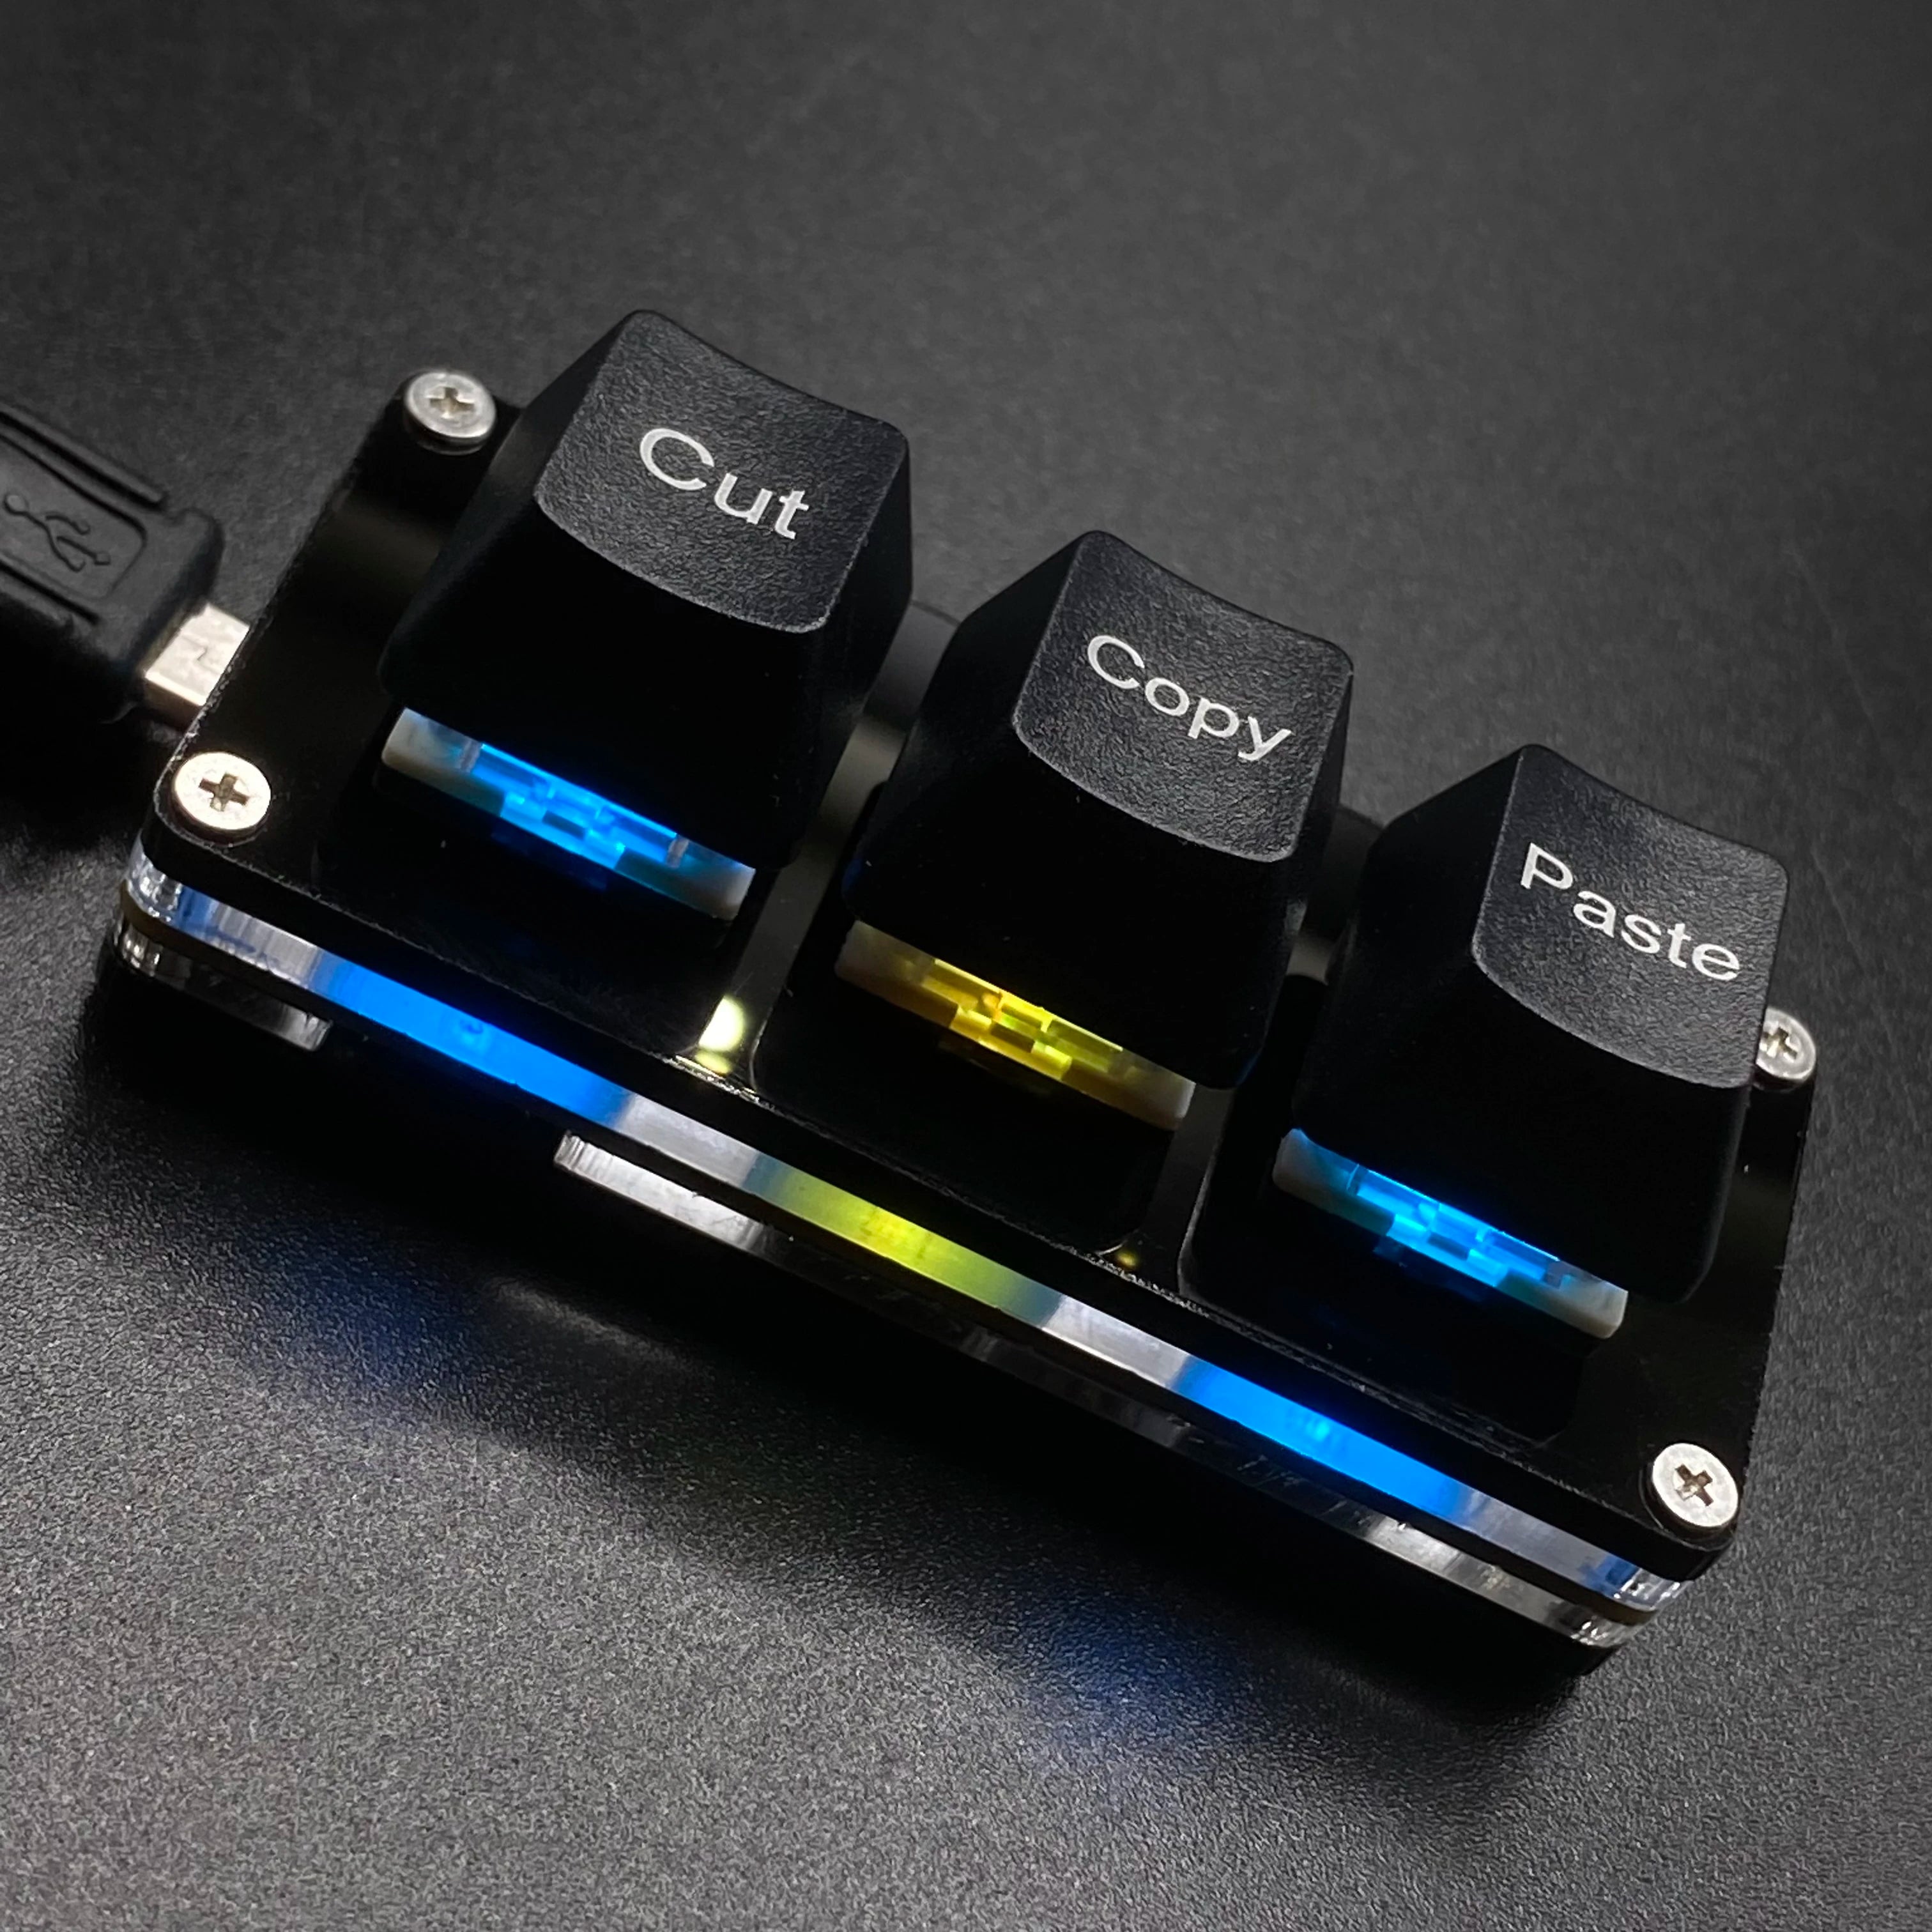 Mini 3-Key Cut Copy Paste Shortcut RGB Macro OSU Keypad Programmable Mechanical Keyboard for Gaming or Working